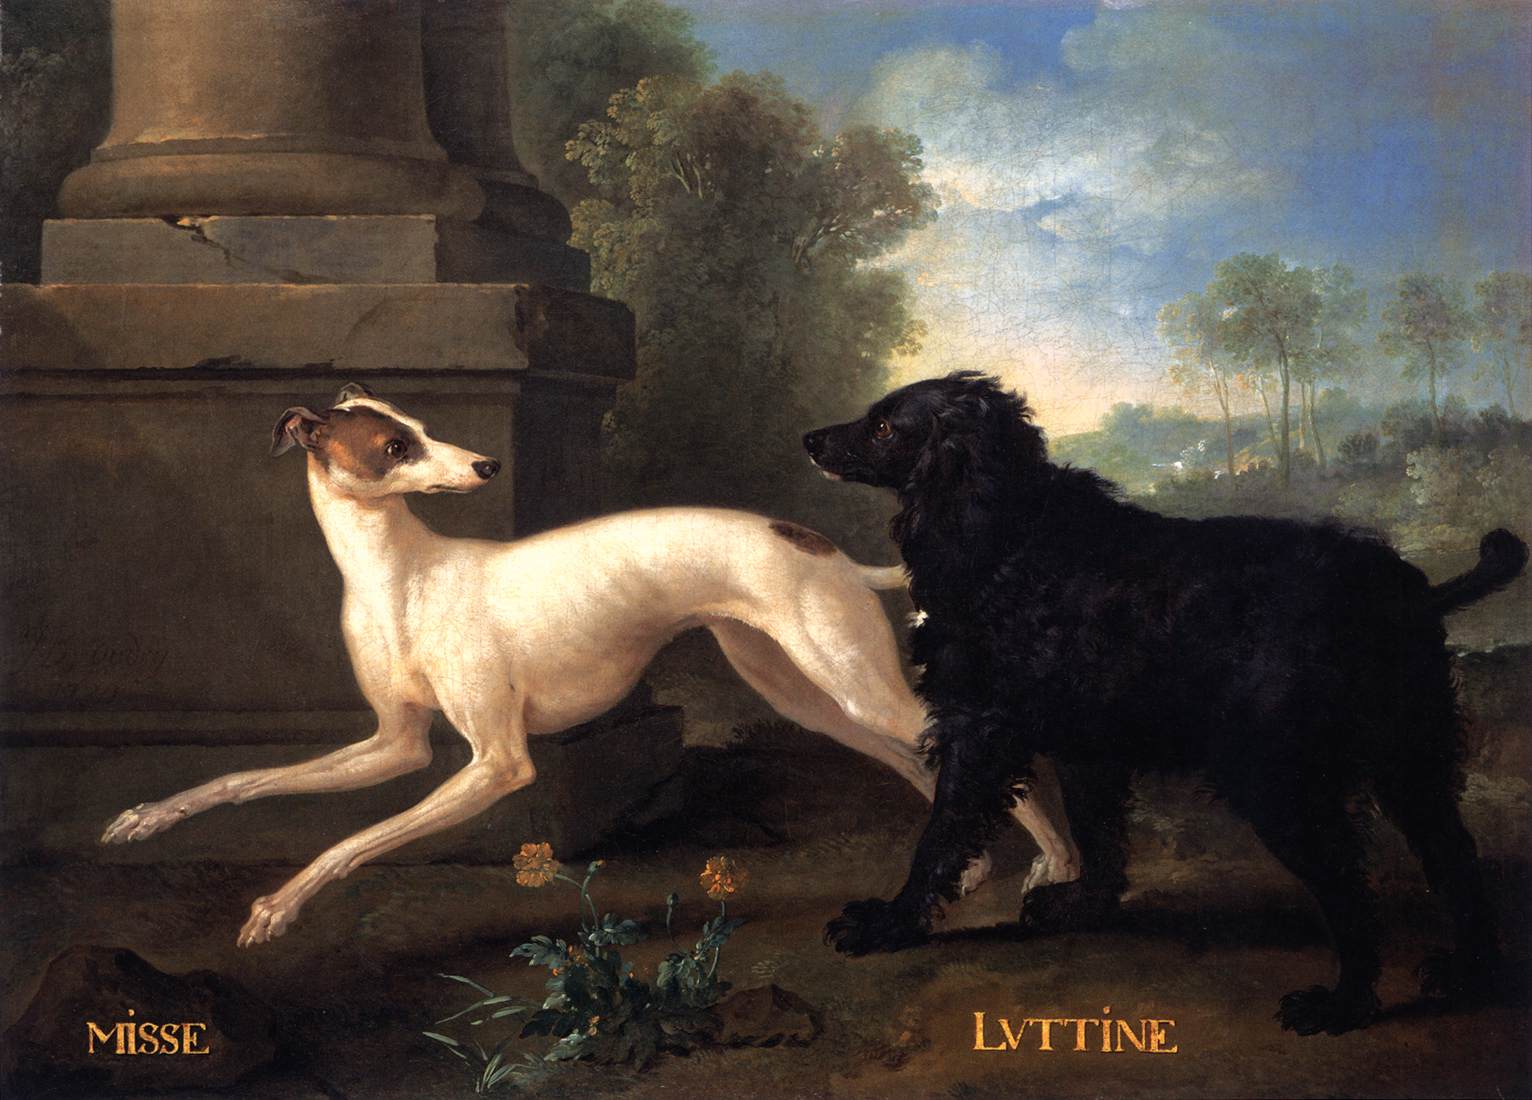 Missse and Luttine